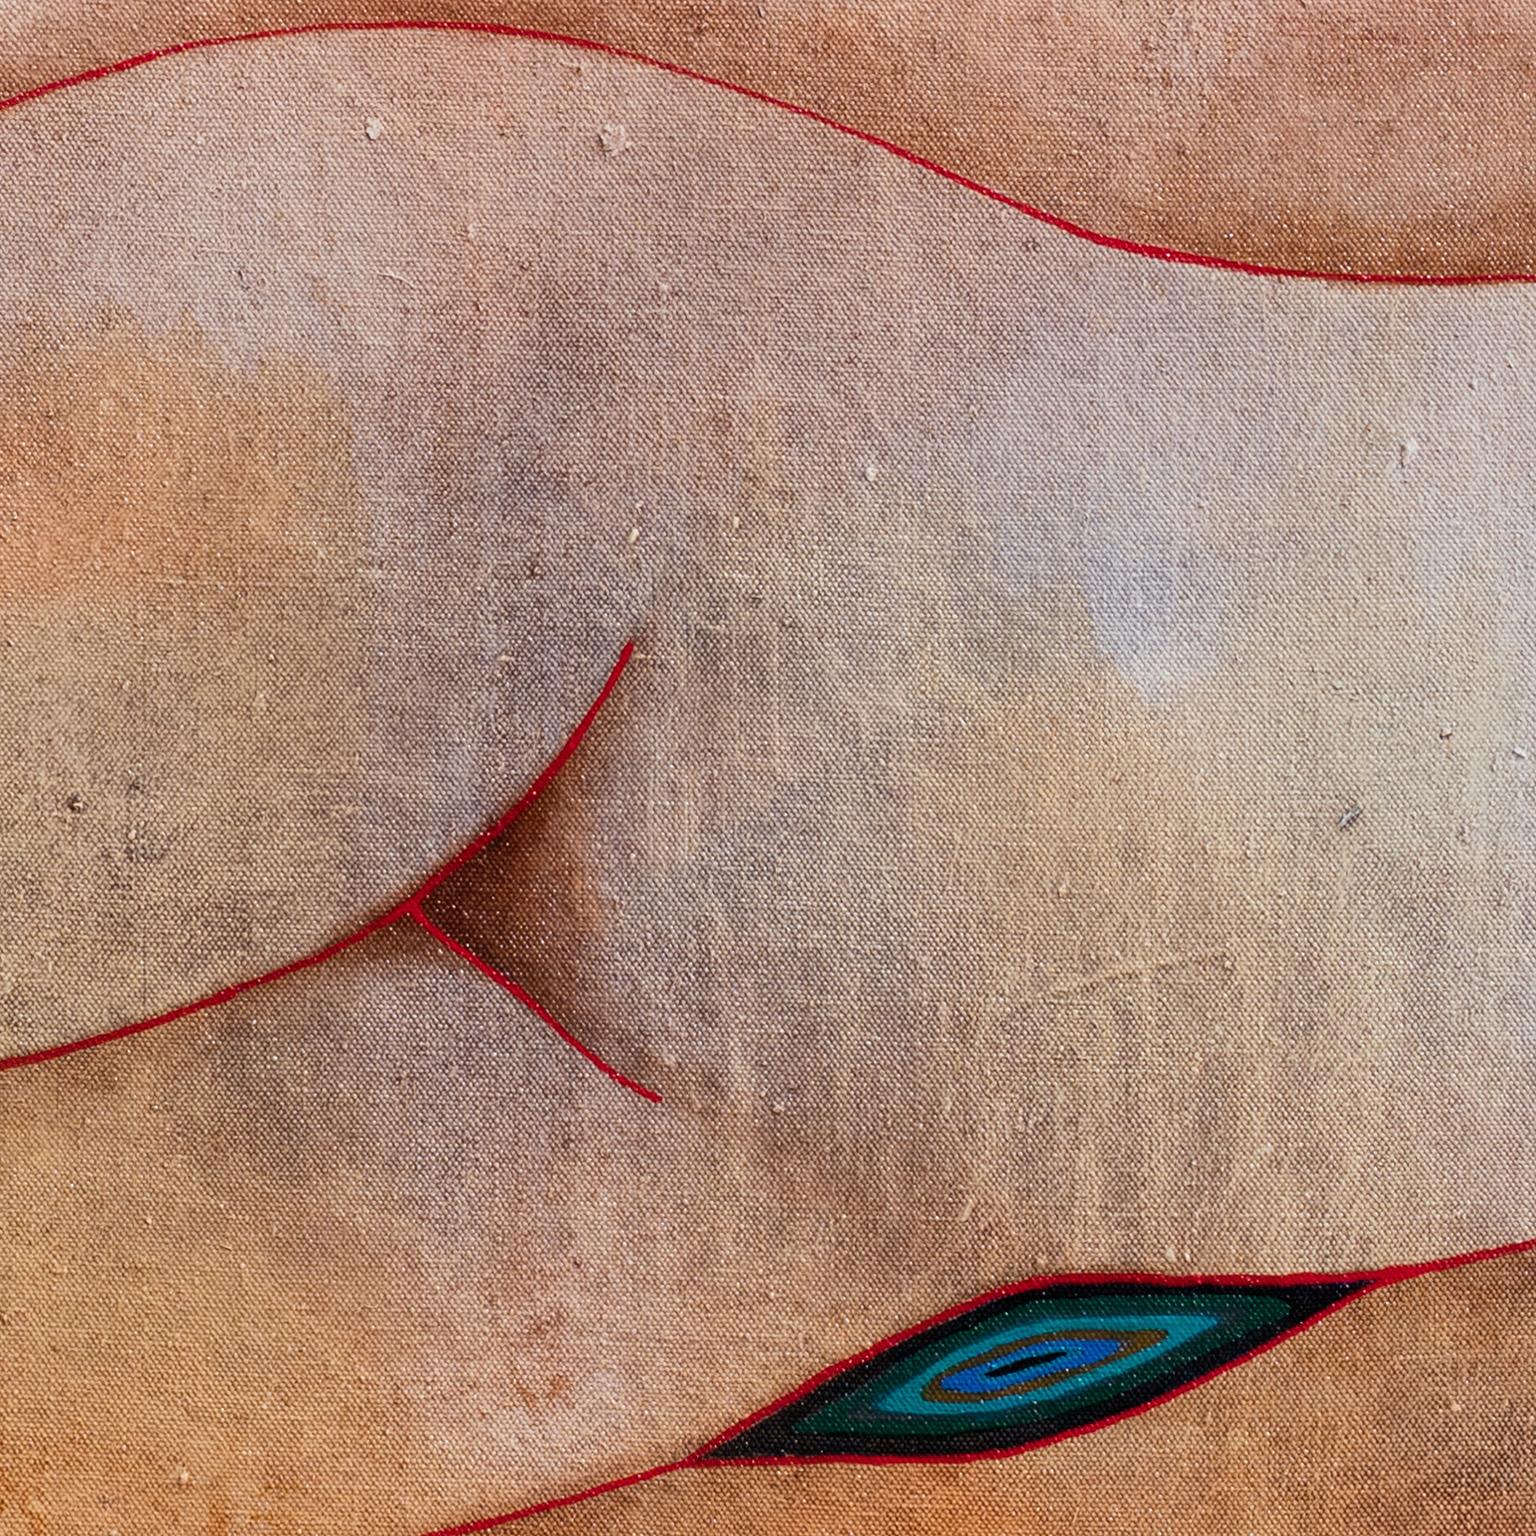 Citherean Venus - Surrealist Painting by Gian Berto Vanni